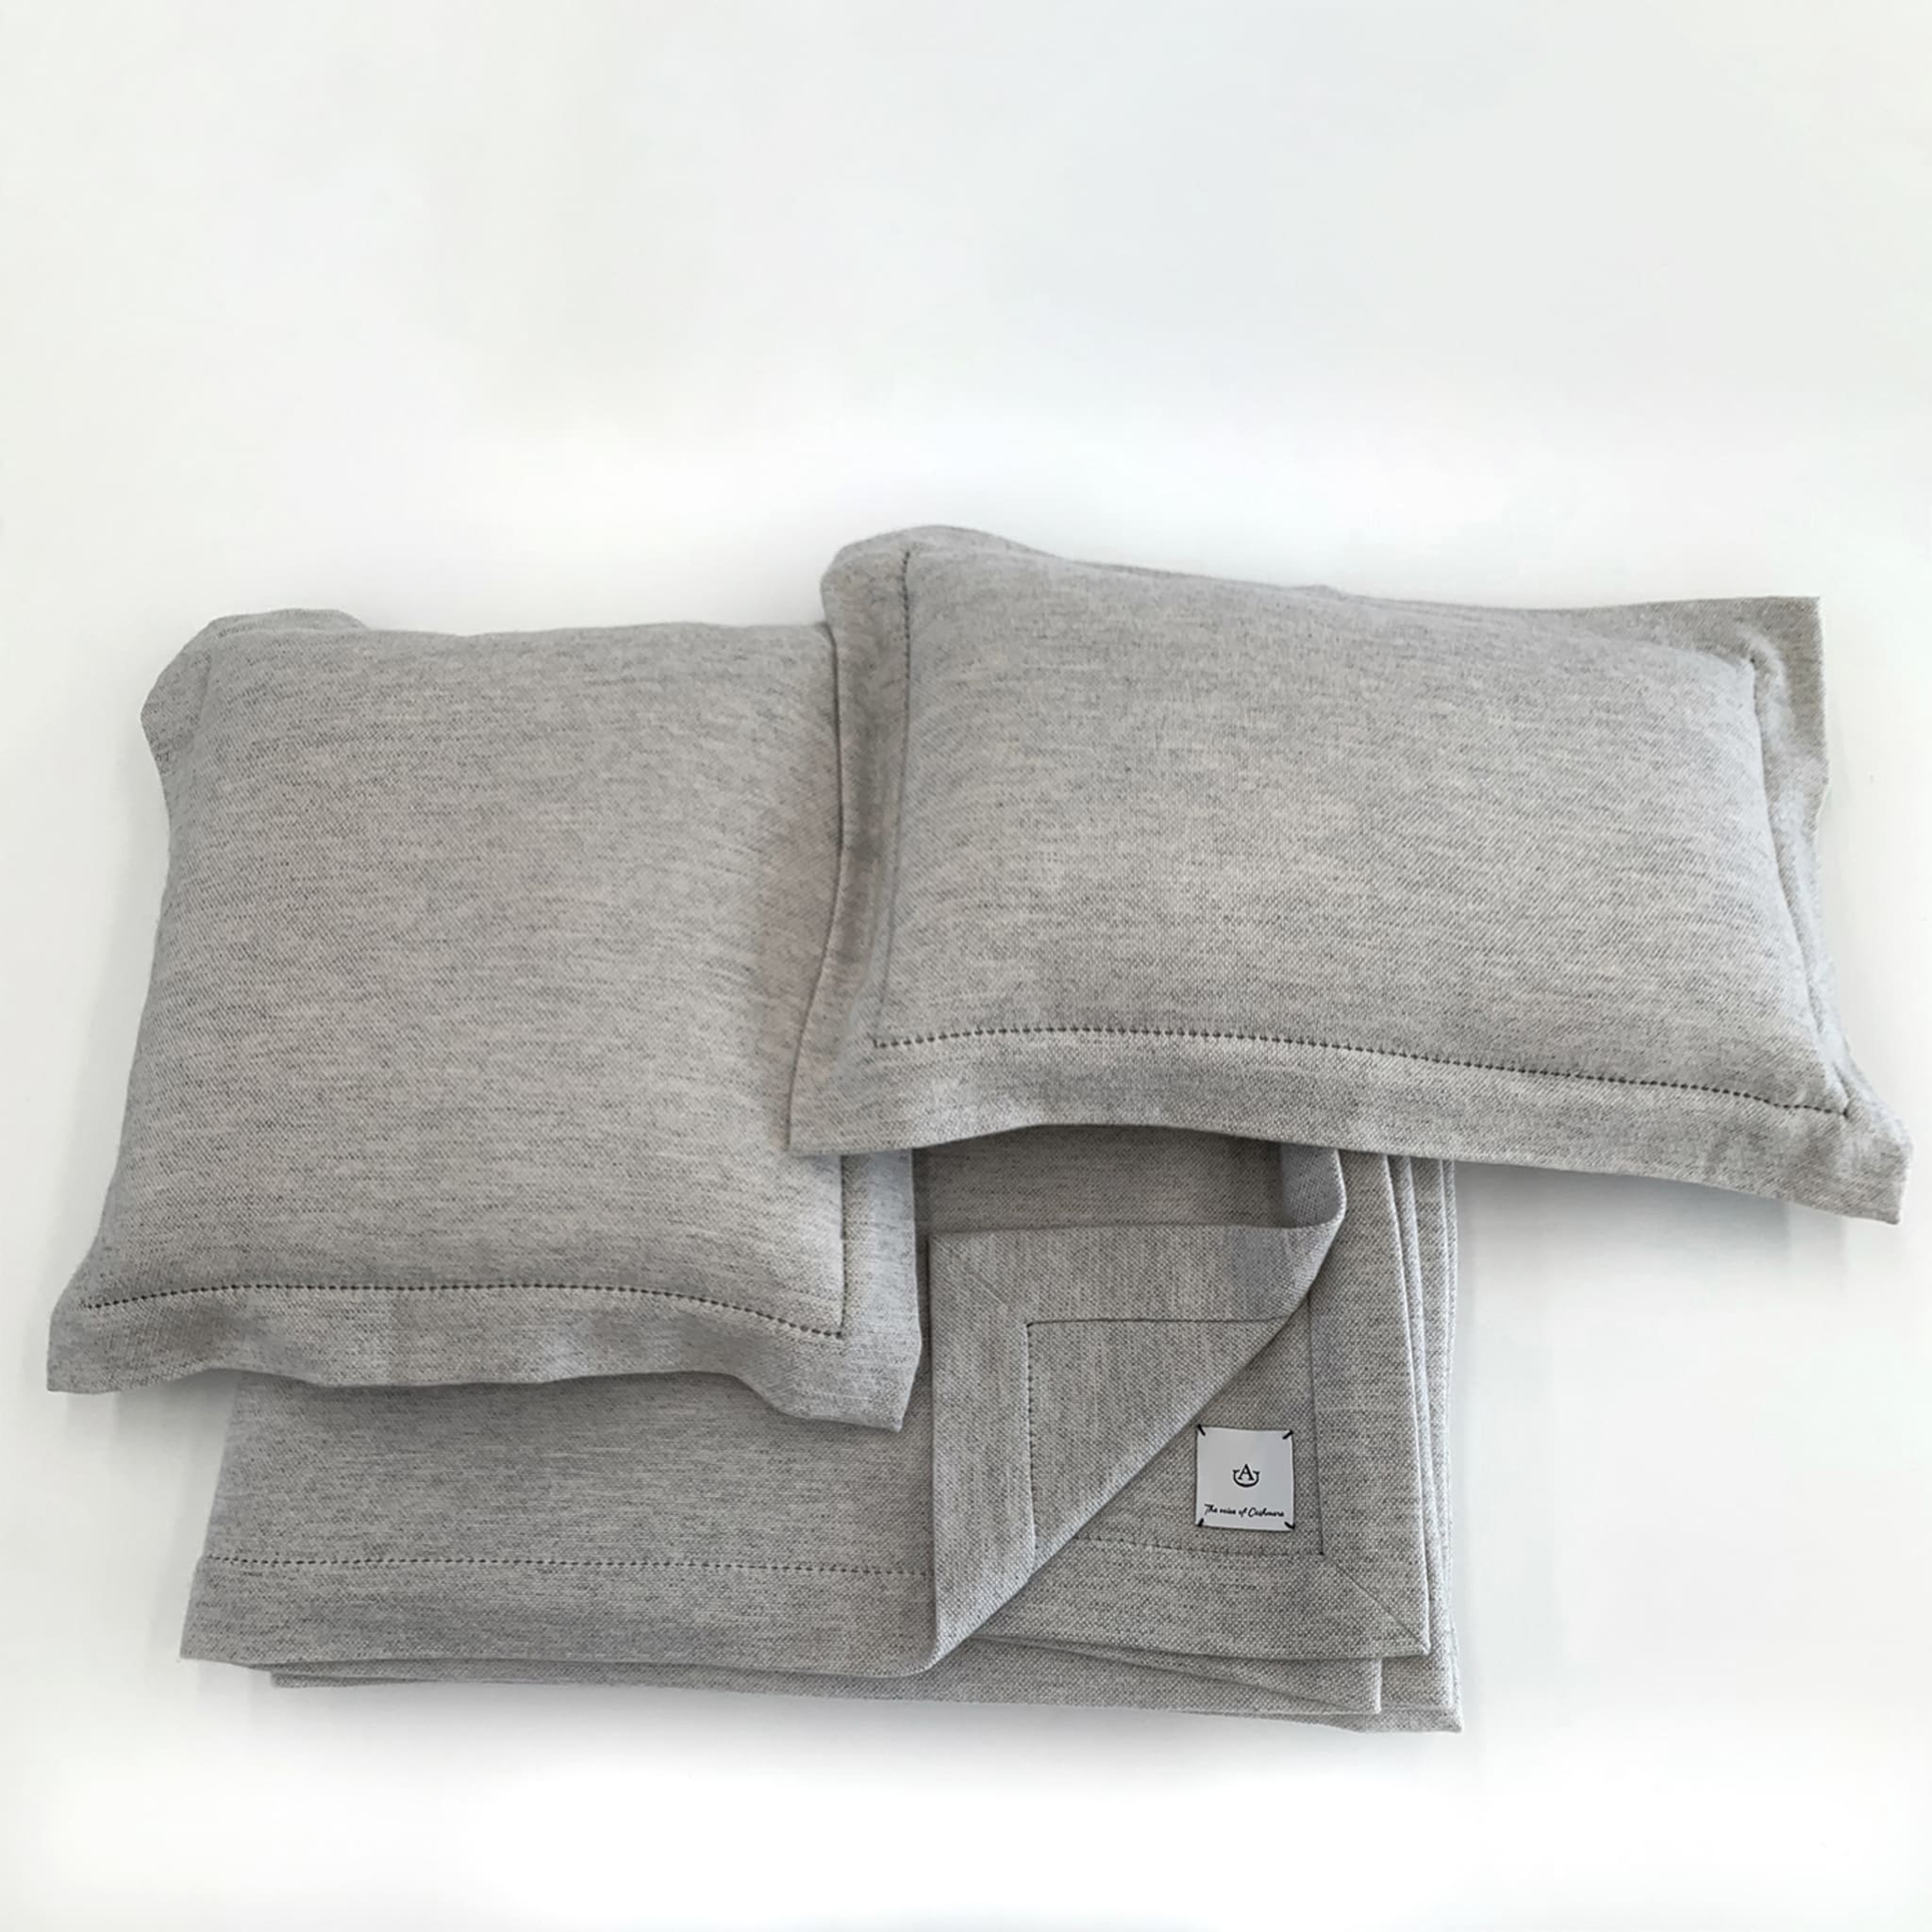 Dalia A Jour Gray Rectangular Pillow - Alternative view 1